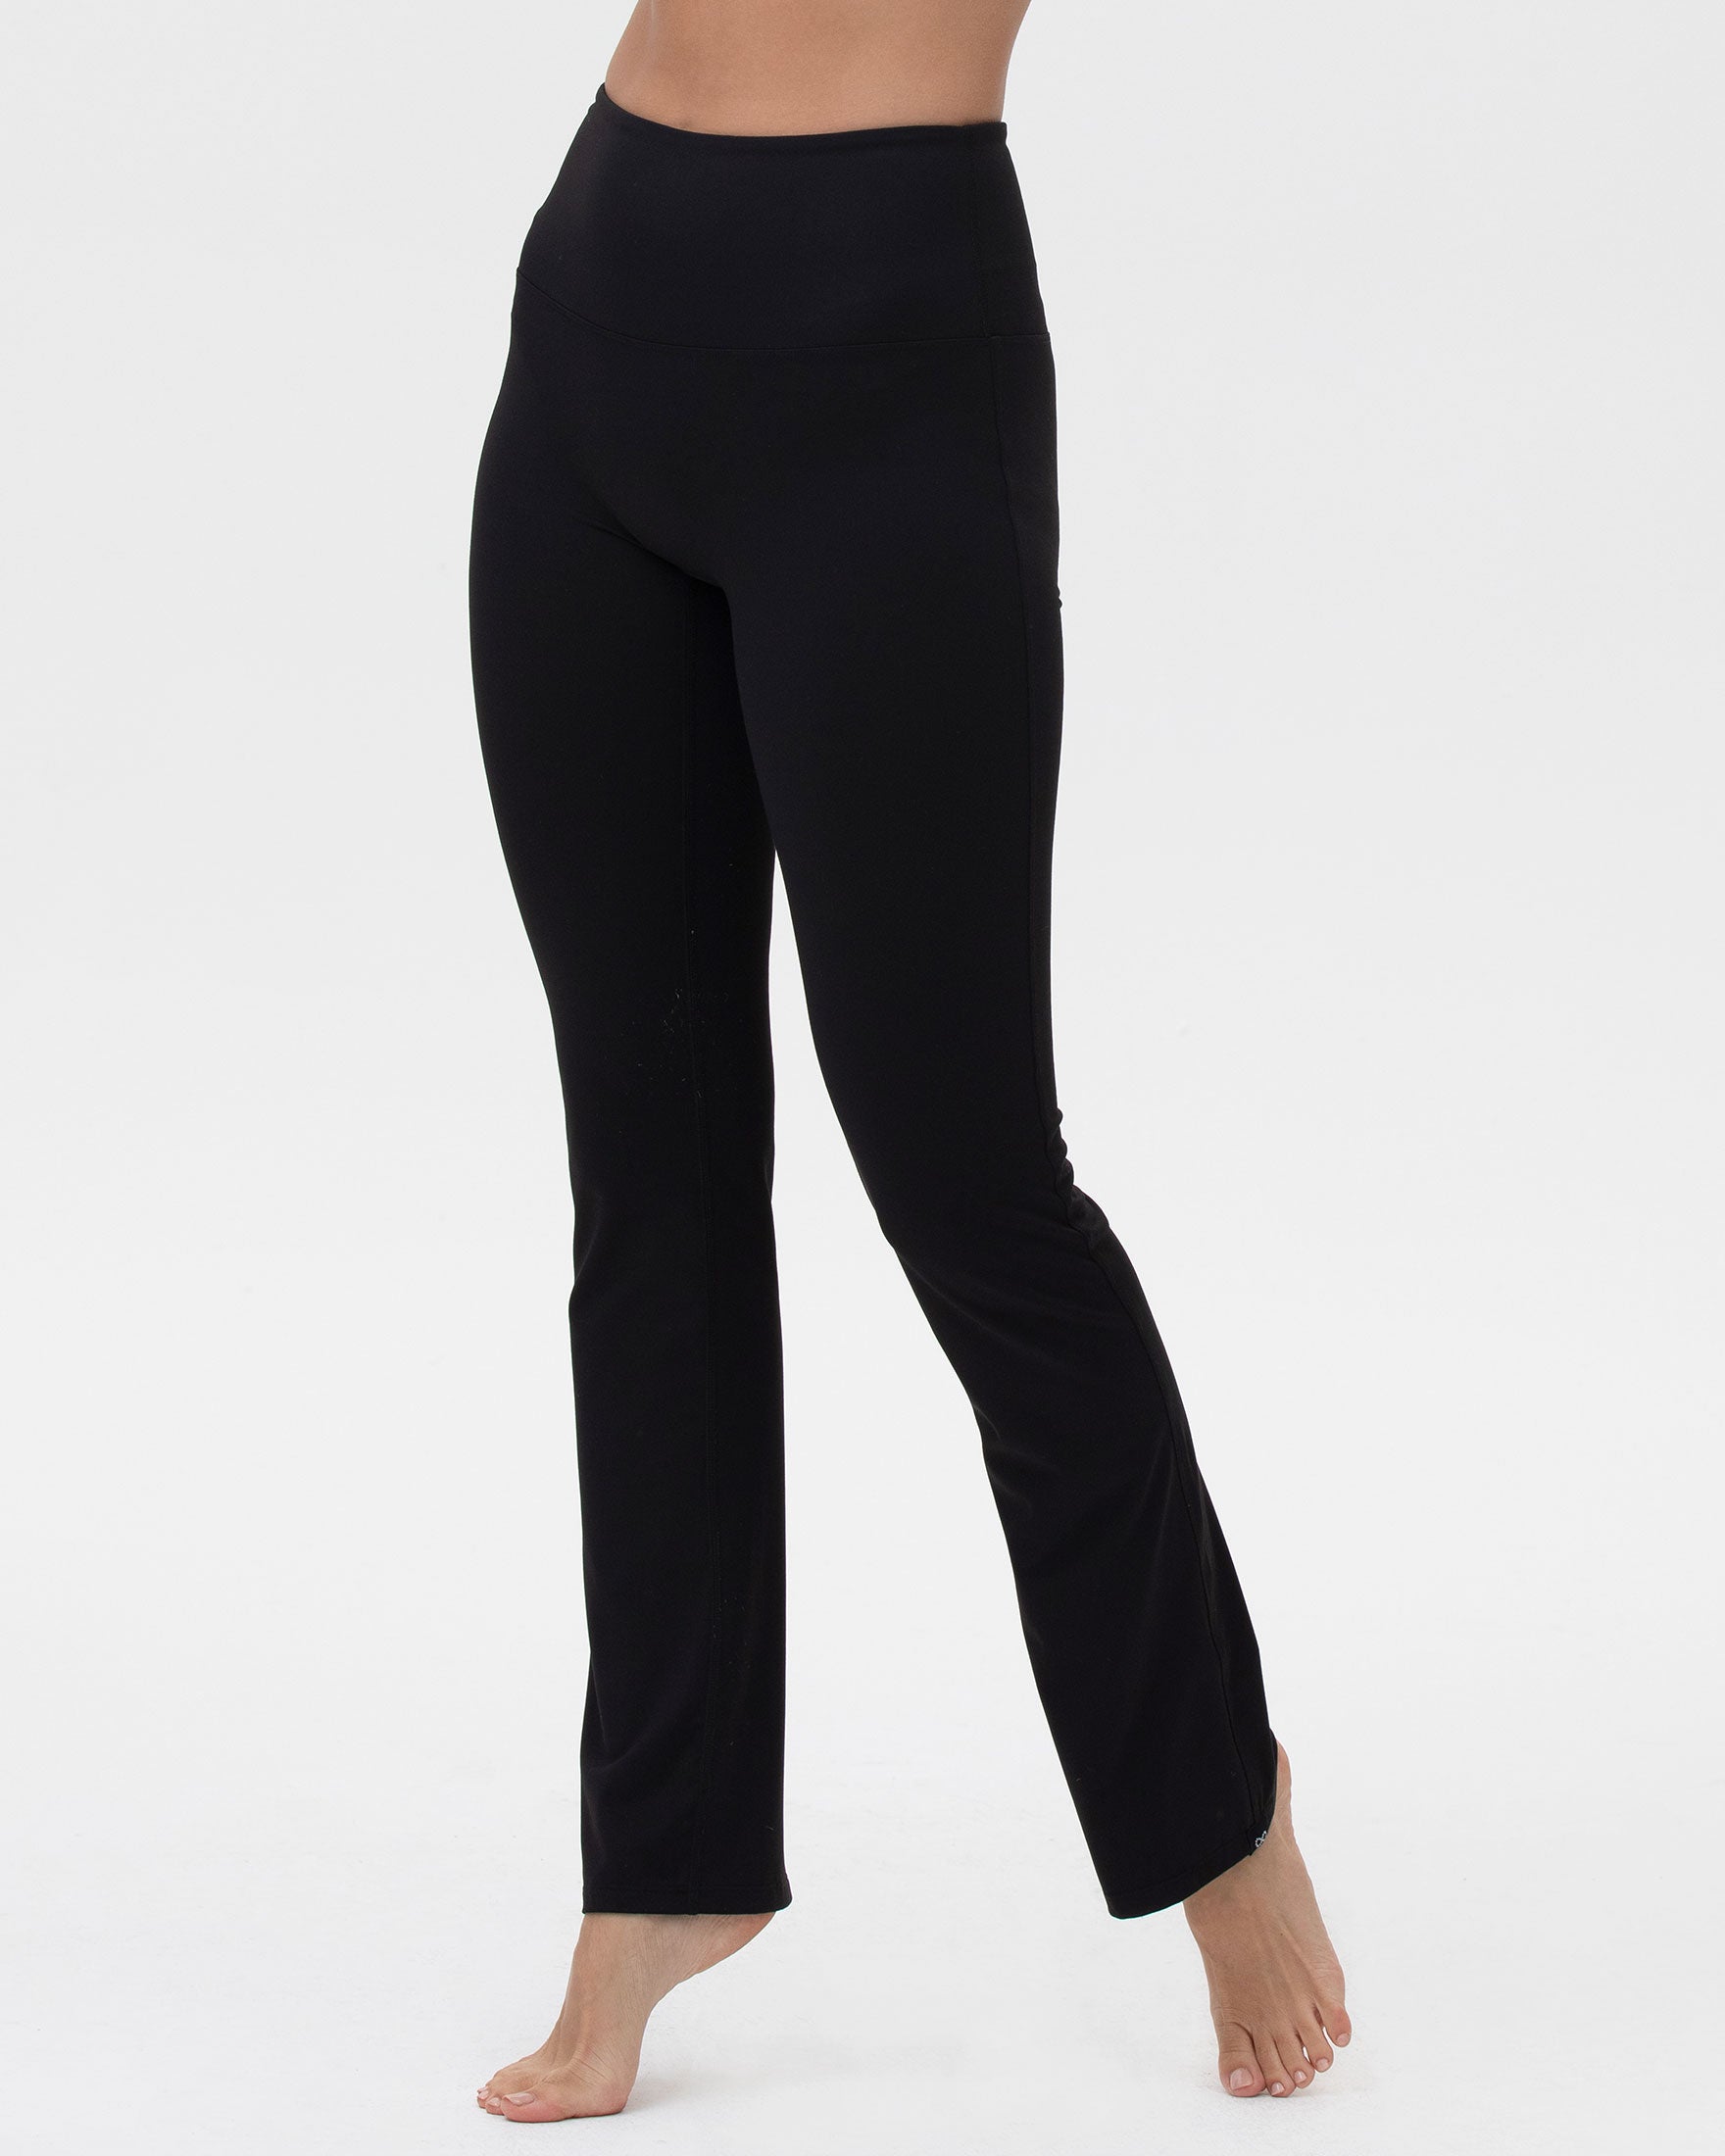 Plus Size Bootcut Yoga Pants Bottoms Cato Fashions